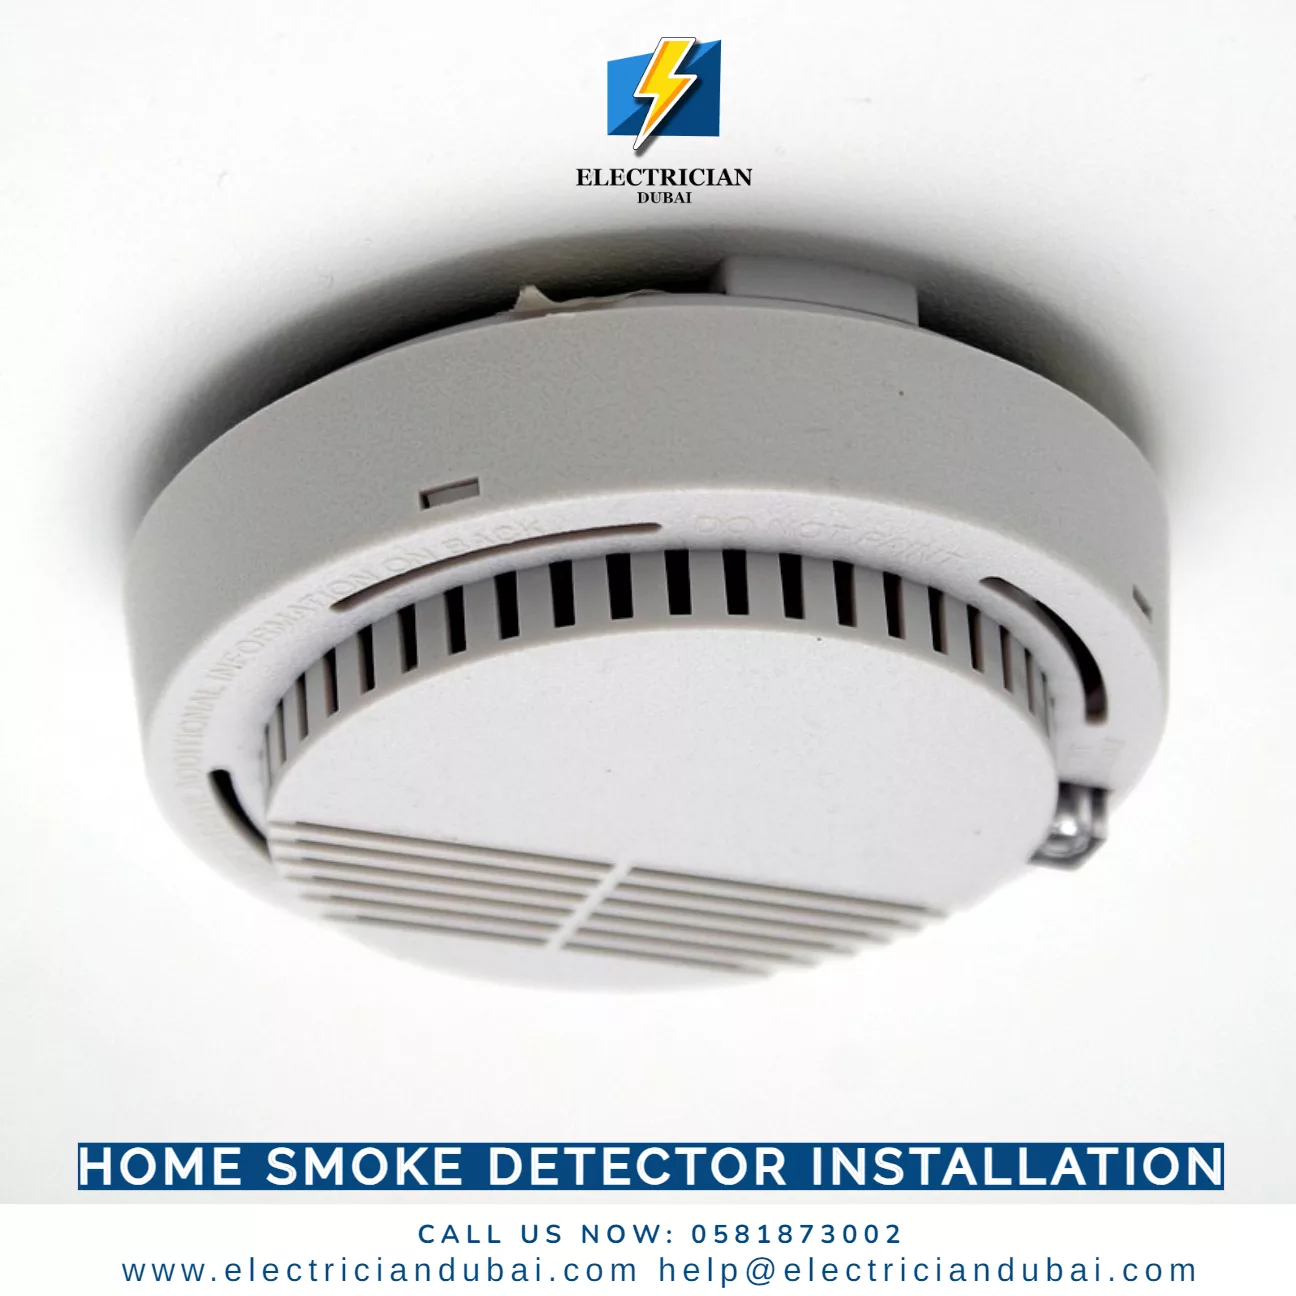 Home Smoke Detector Installation